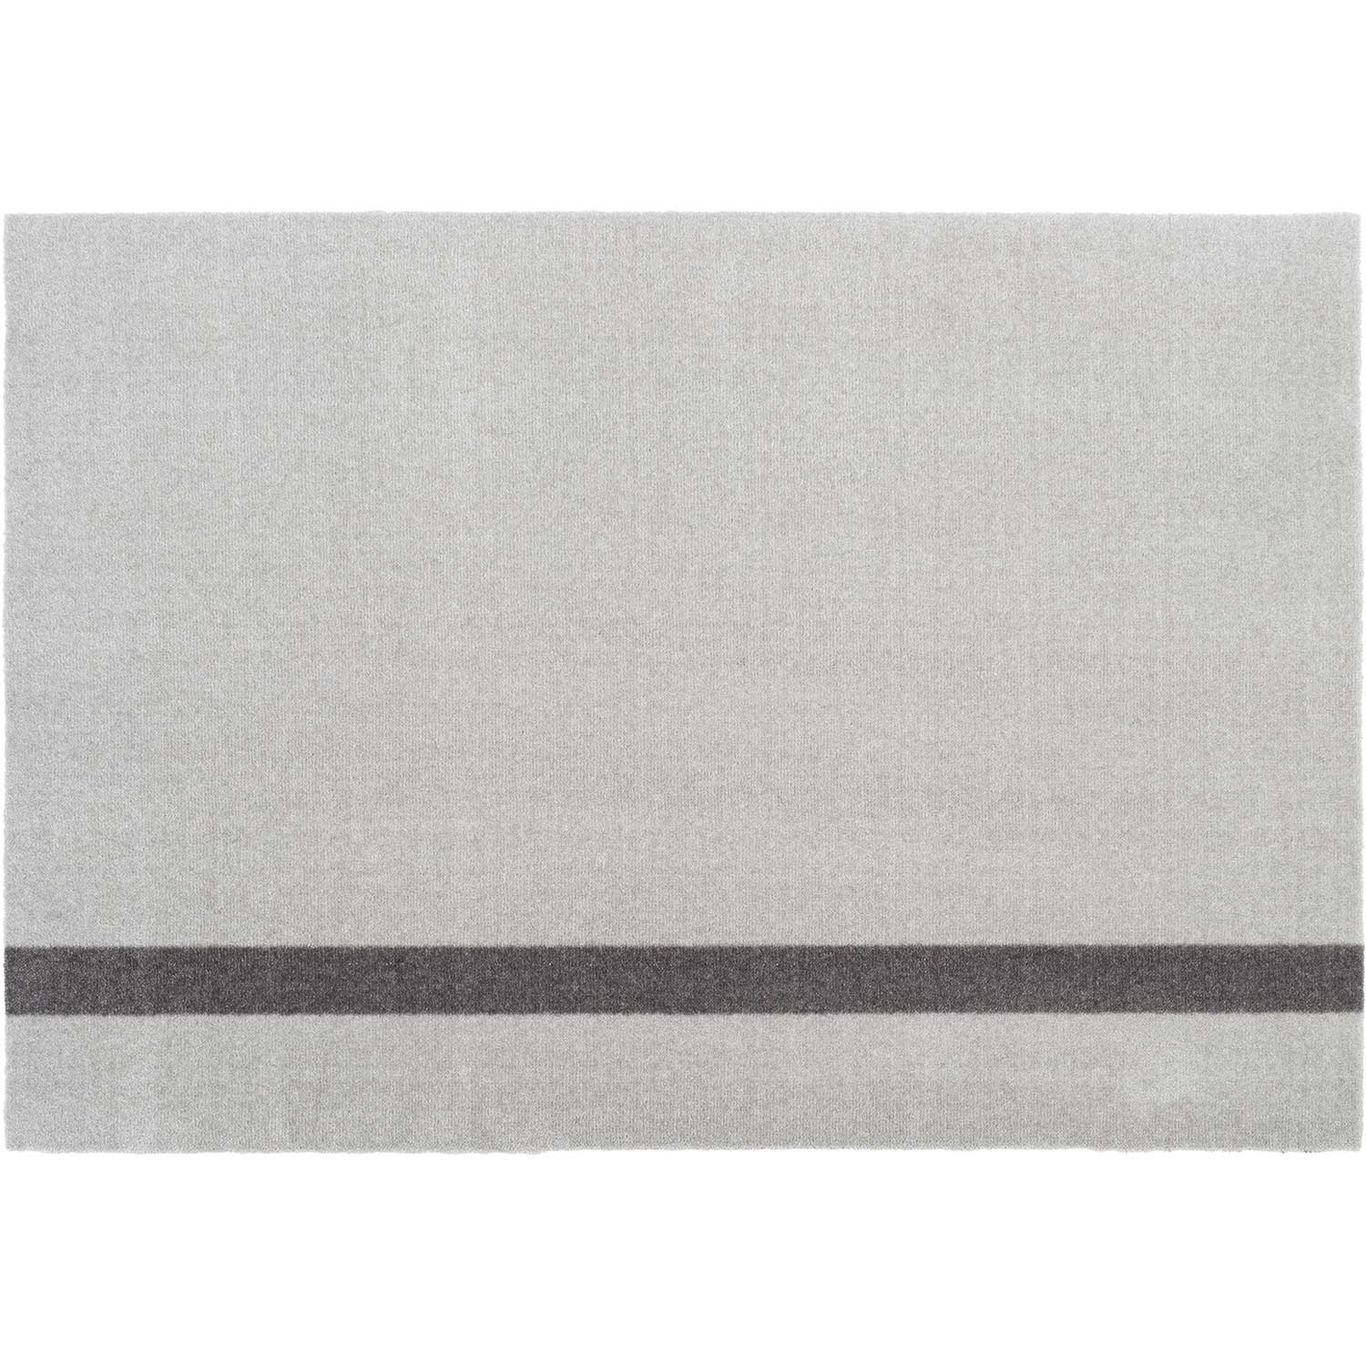 Stripes Vertikal Rug Light Grey / Steel Grey, 90x130 cm